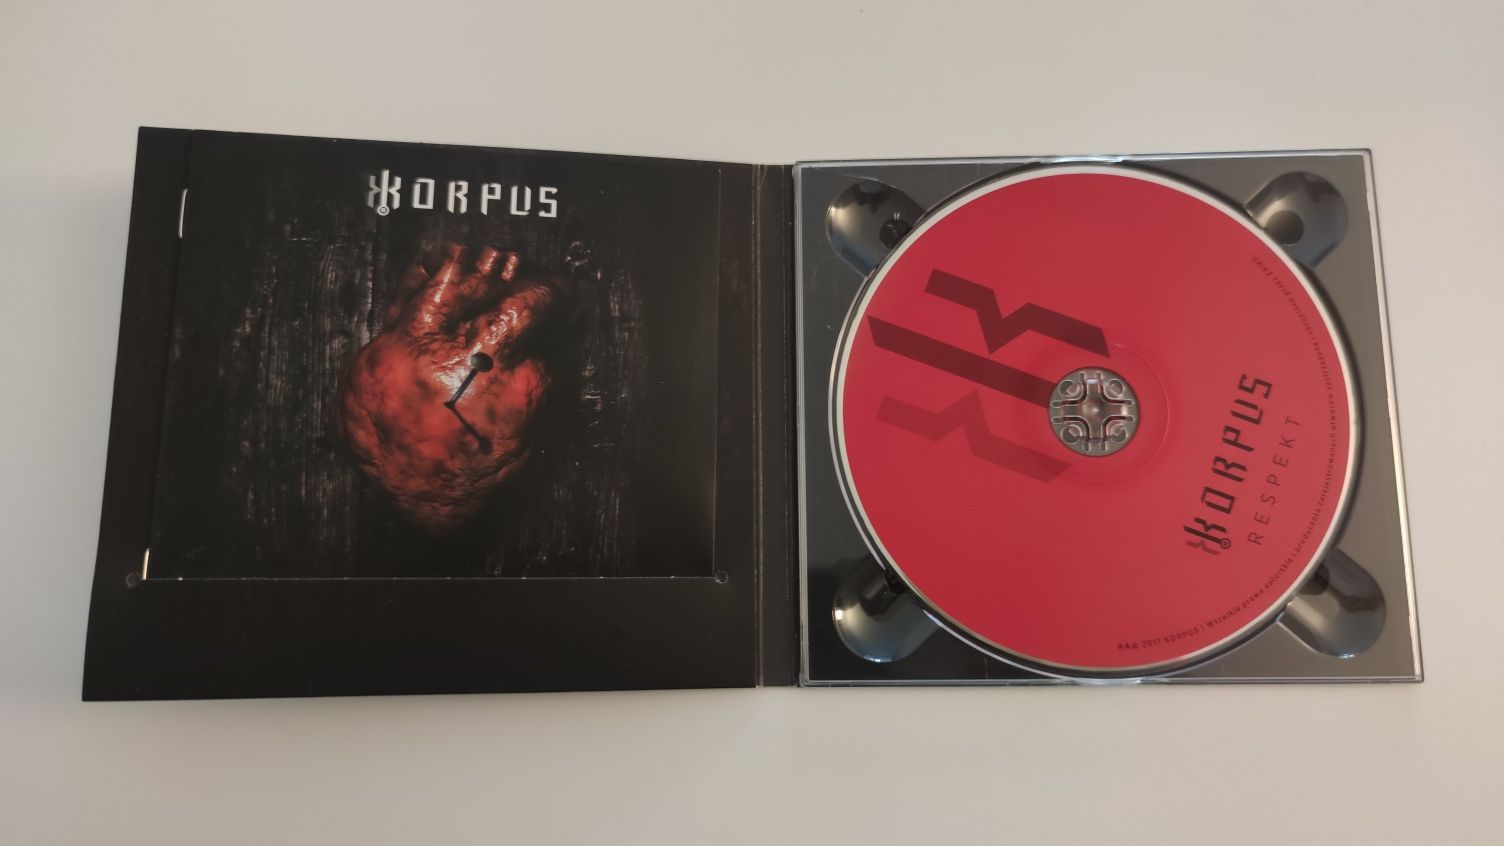 Korpus - Respekt CD